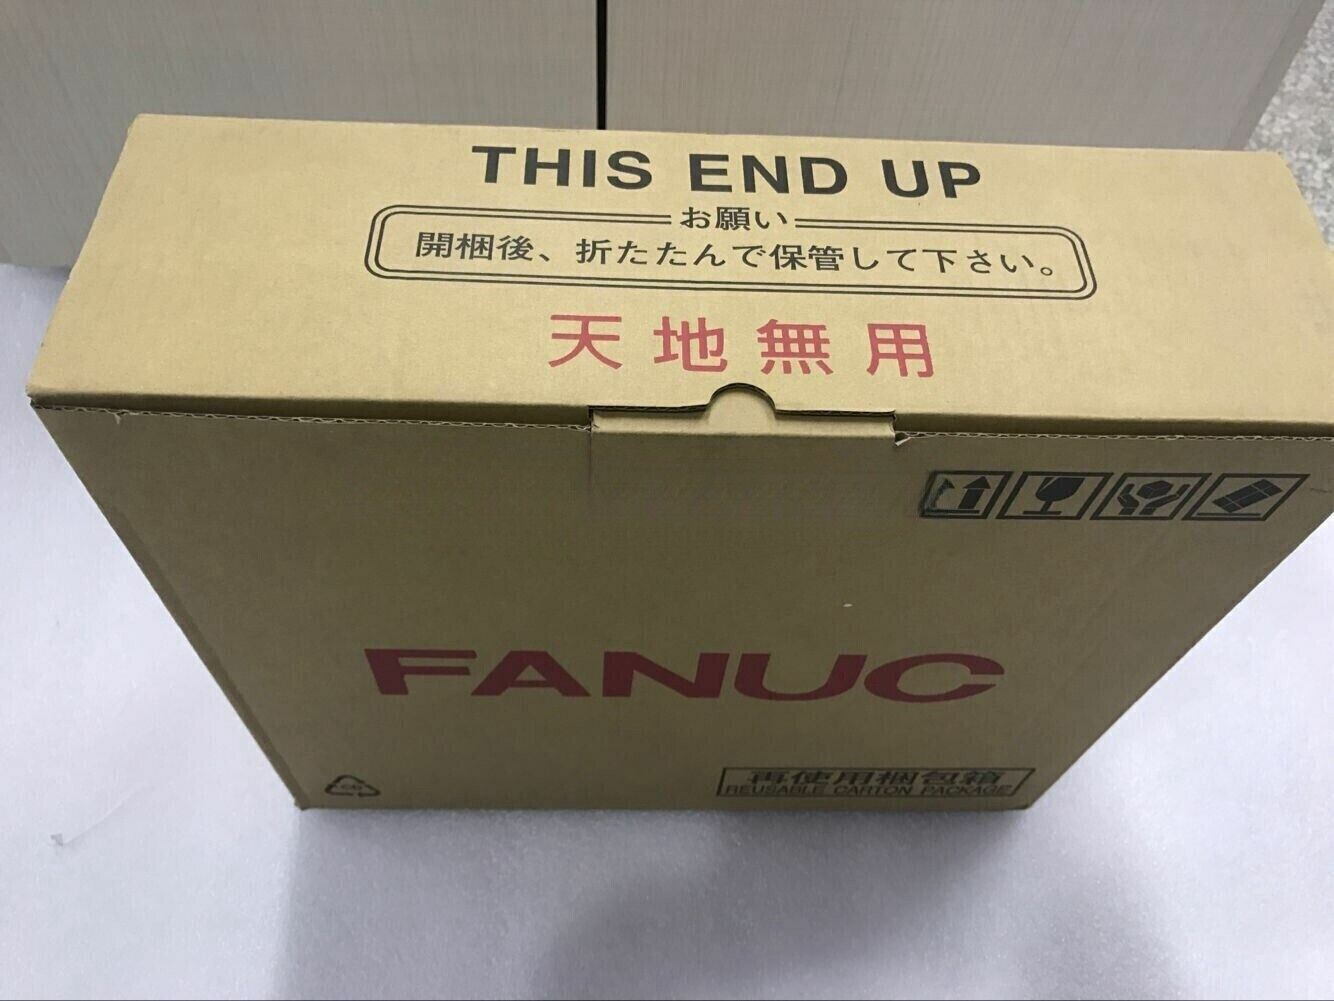 A06B-6117-H208 Fanuc Servo drive amplifier Brand new unused DHL shipping